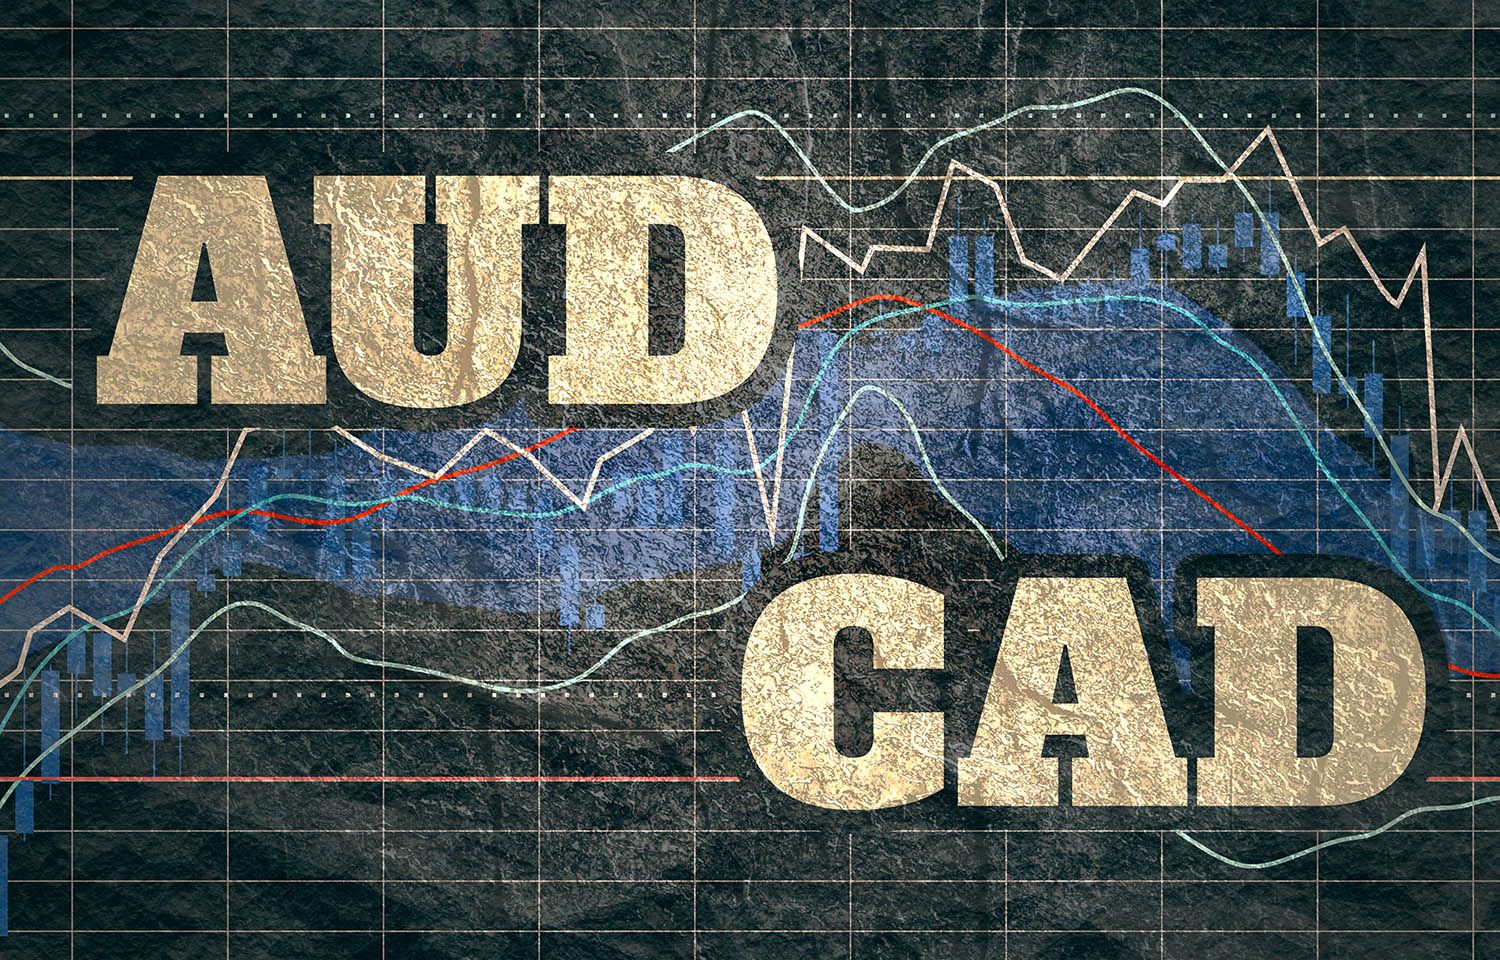 AUD vs. CAD exchange rates